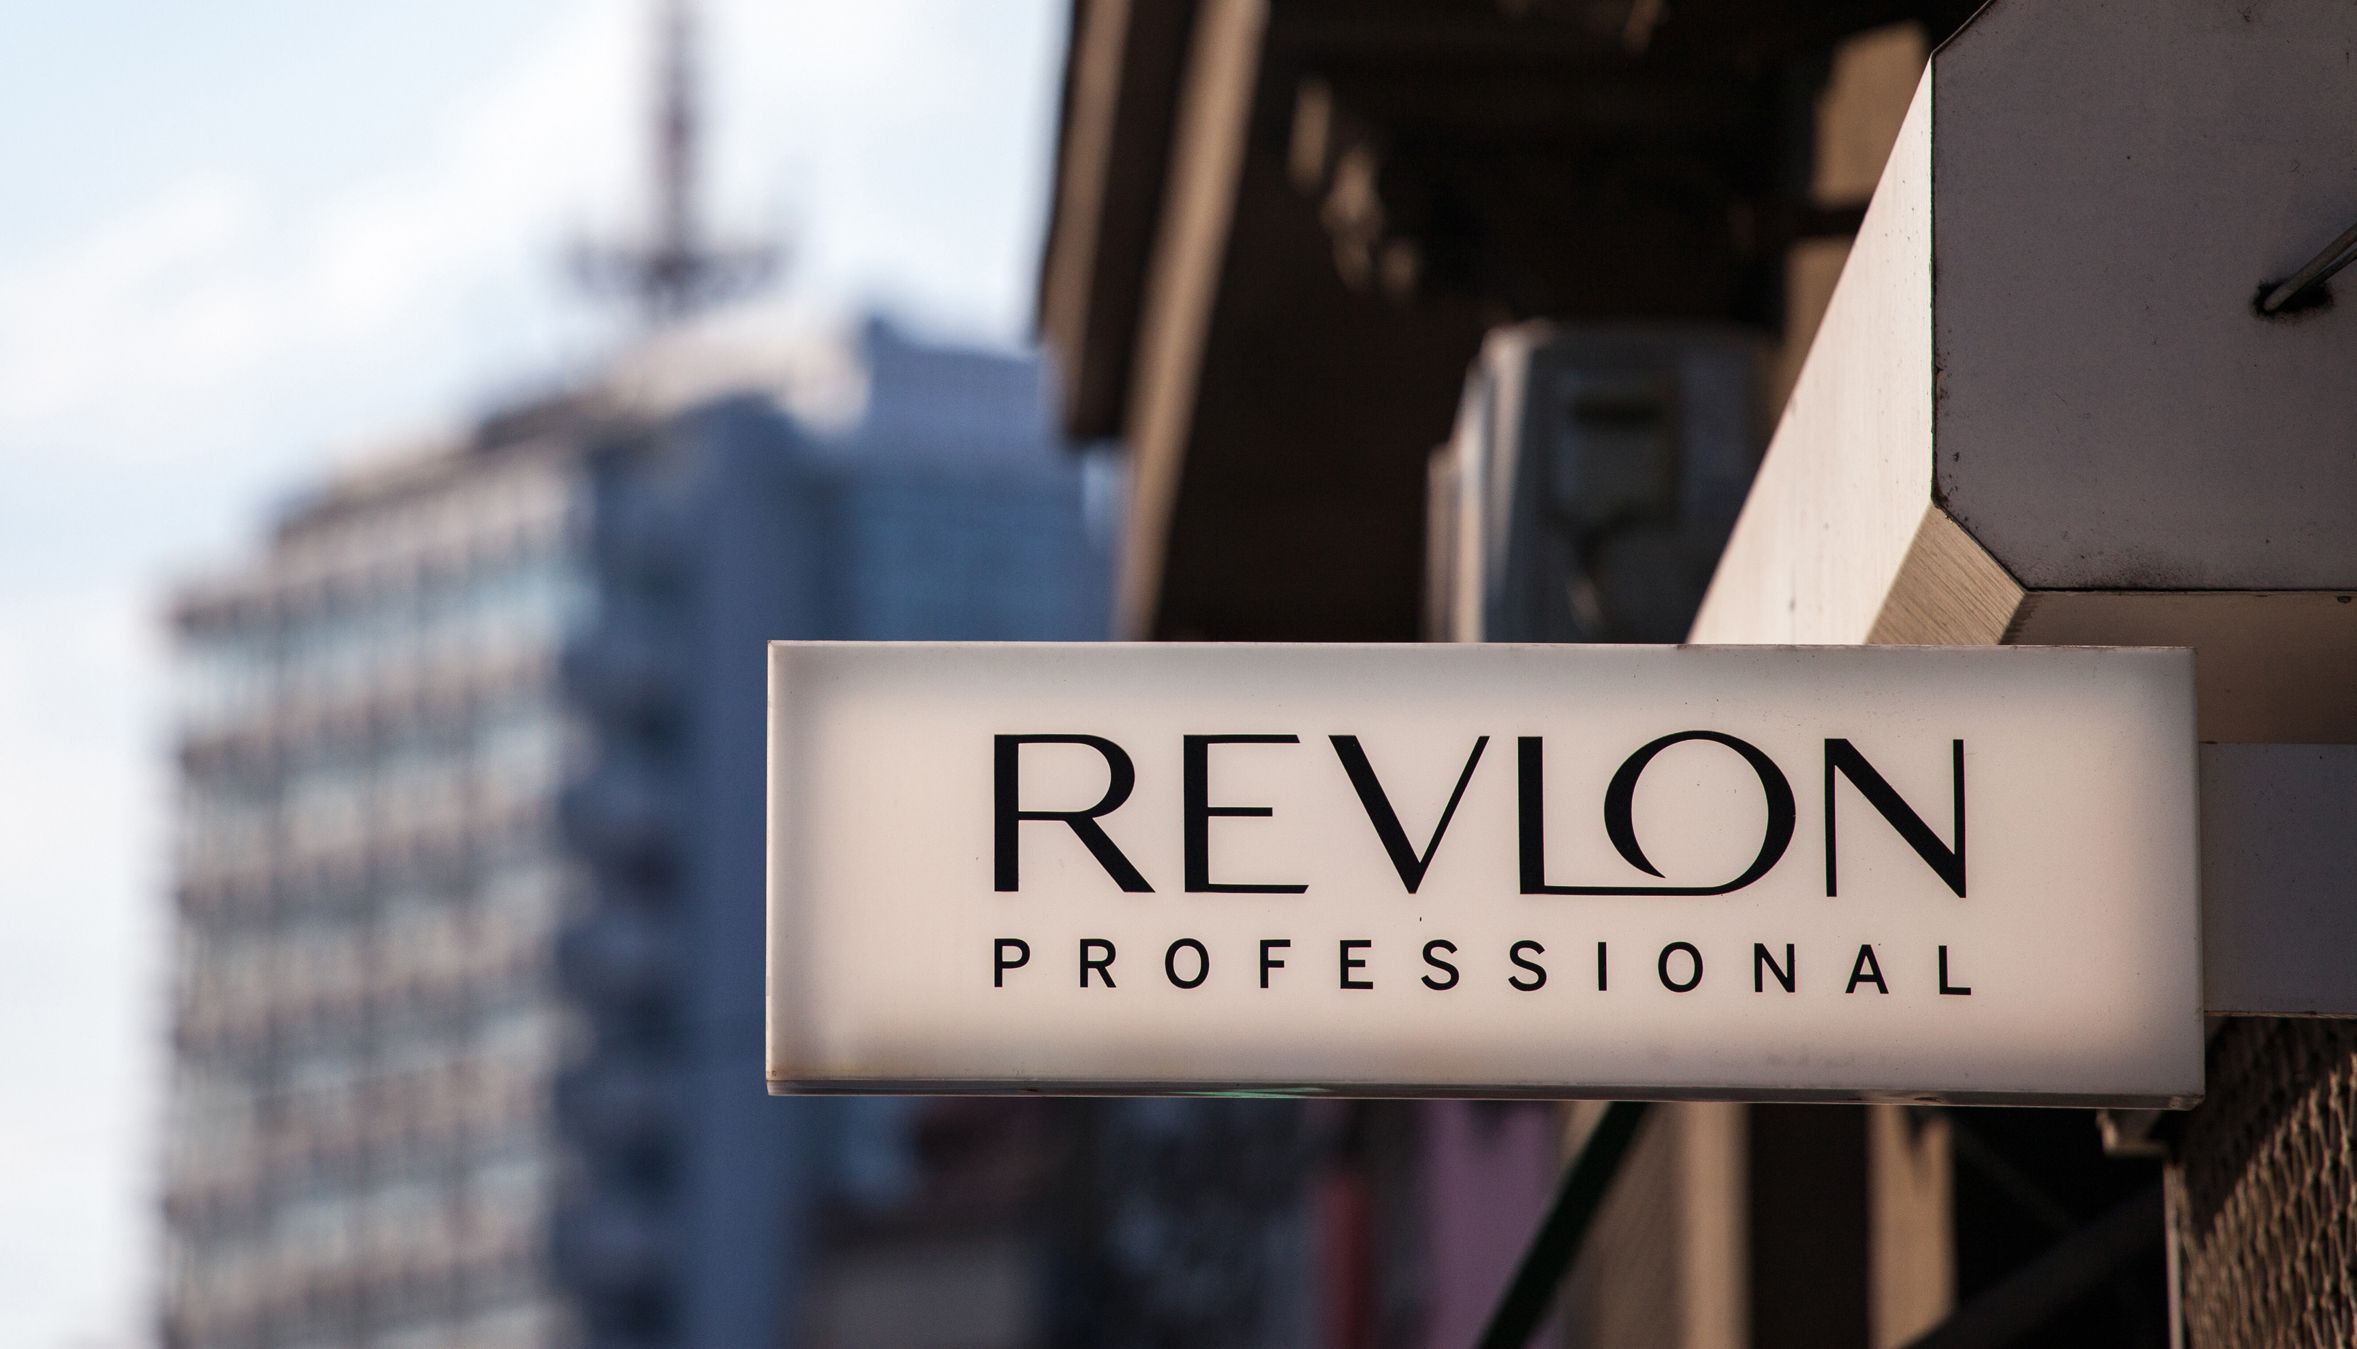 Revlon Emerges From Bankruptcy After Lender Takeover